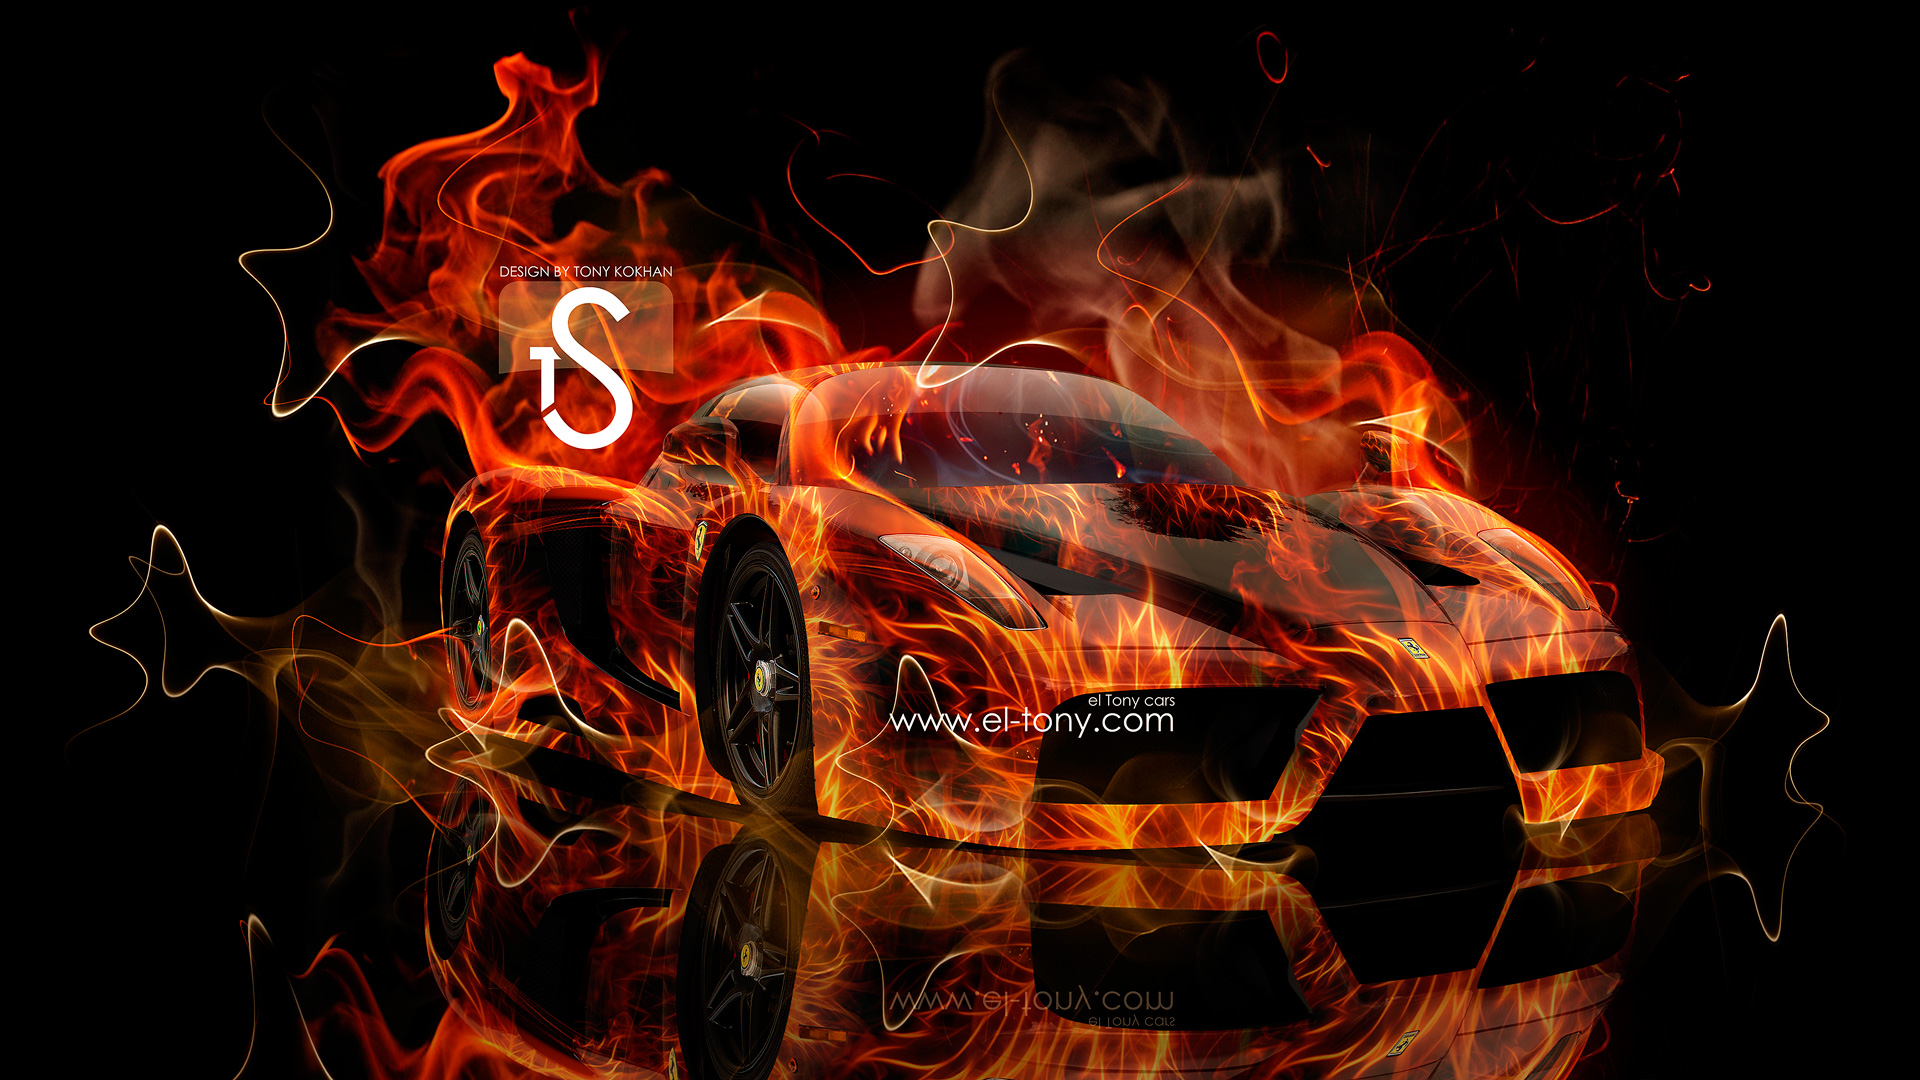 Ferrari Enzo Fire Car Abstract Smoke HD Wallpaper Design By Tony